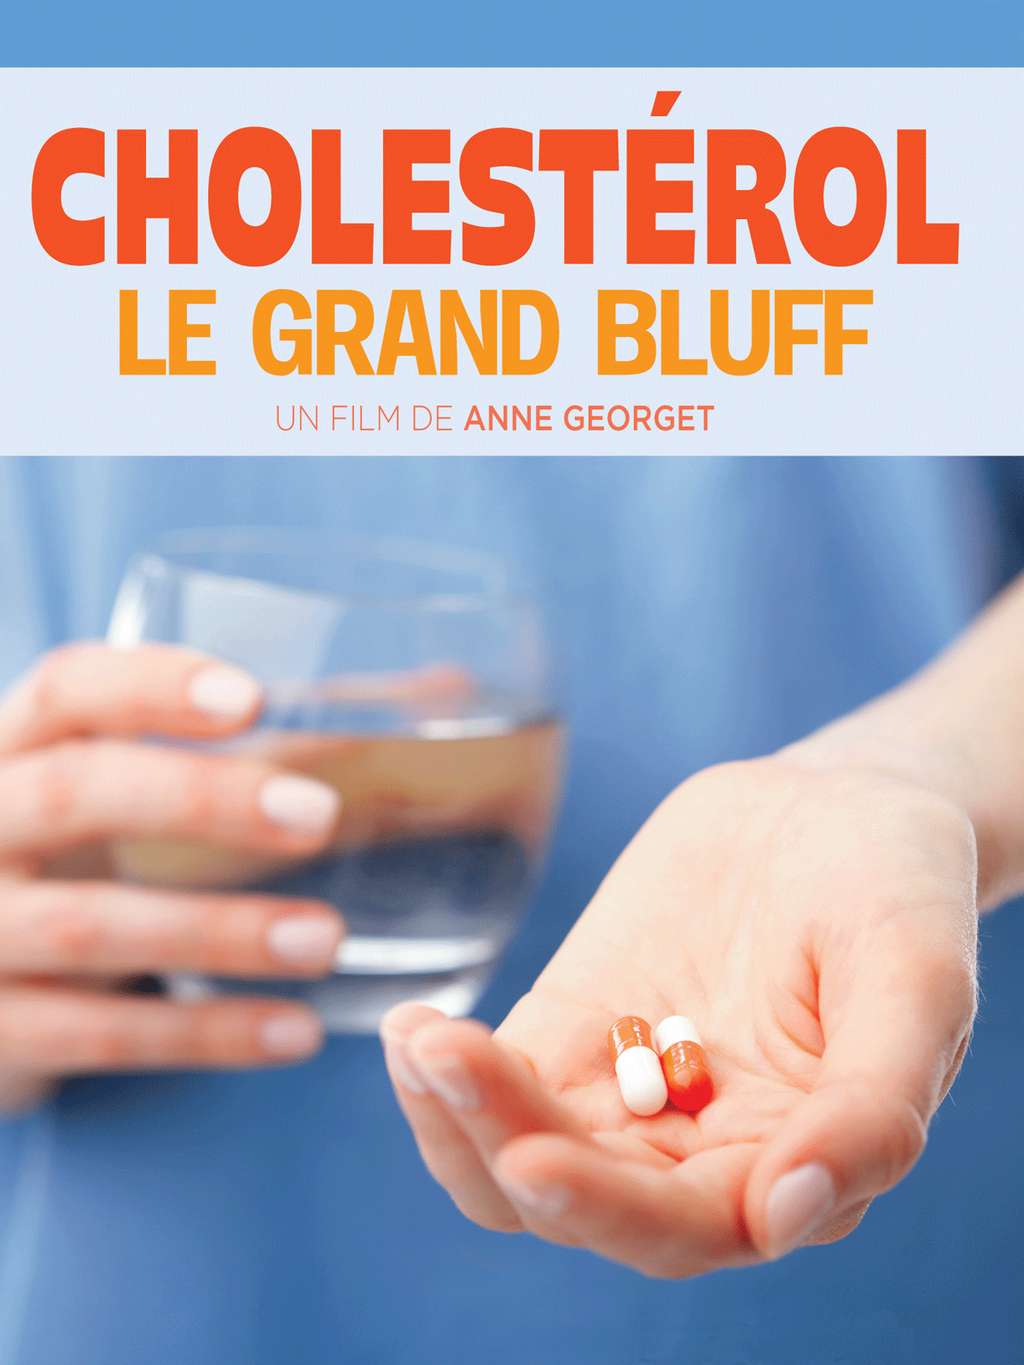 Cholestérol : le grand bluff © Amazon